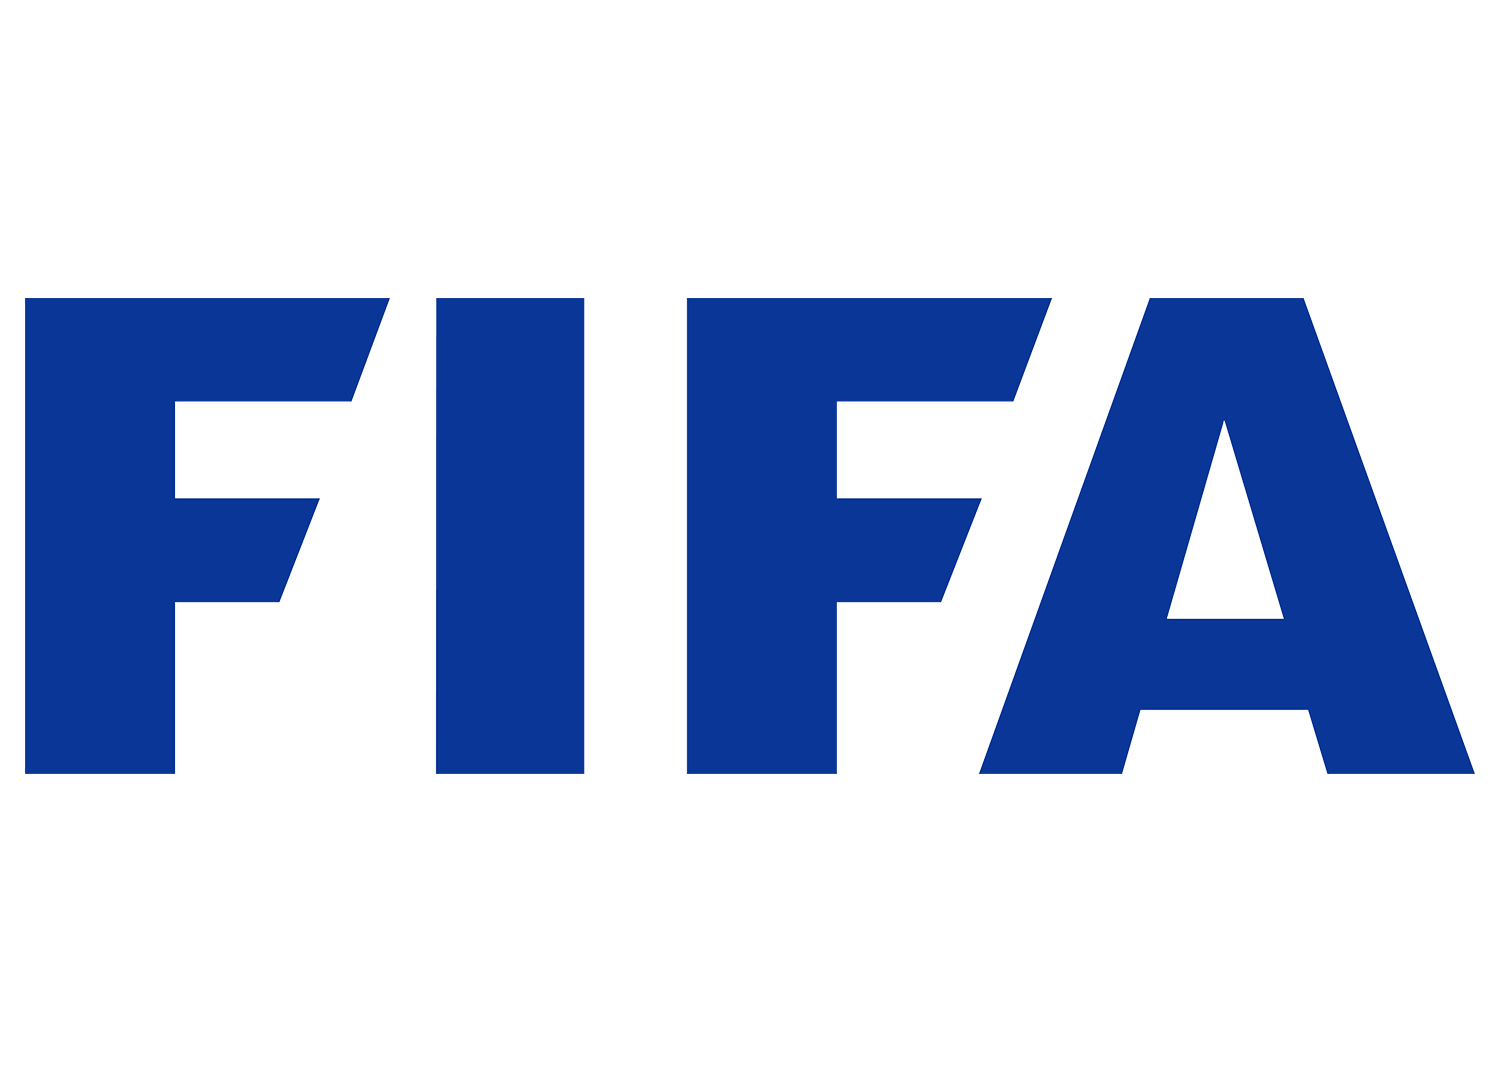 Fifa logo PNG transparent image download, size: 1500x1072px